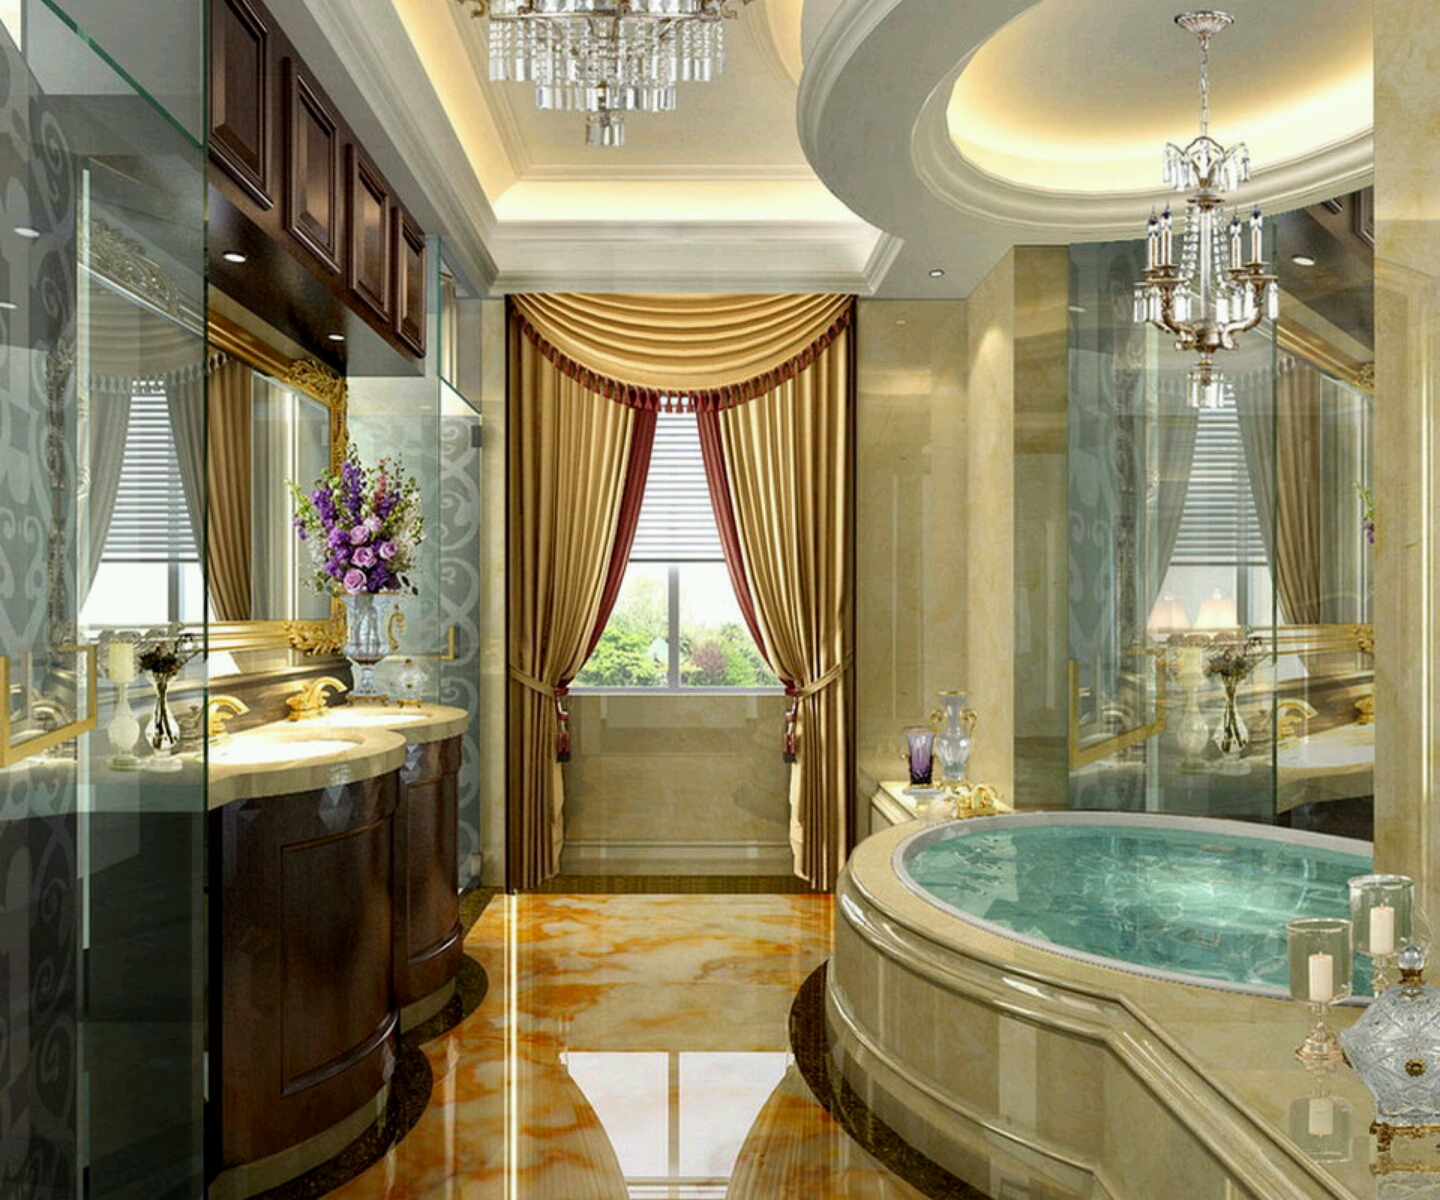  home designs latest.: Luxury modern bathrooms designs decoration ideas